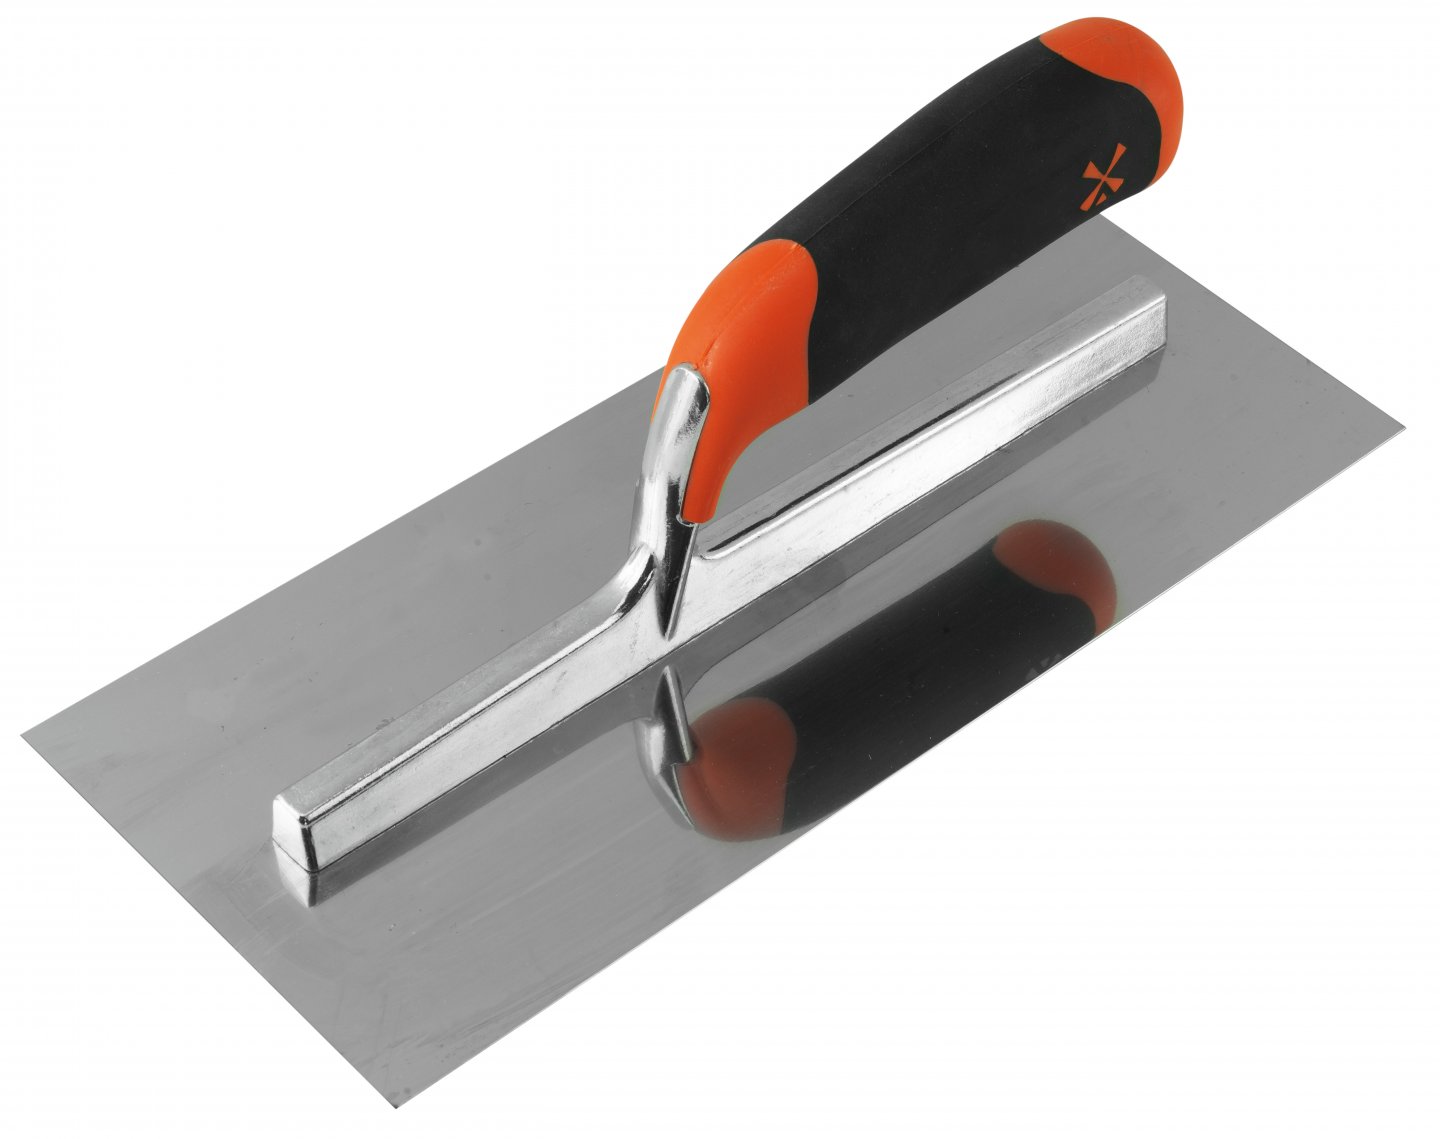 Spreader - stainless steel blade - bimaterial handle 03